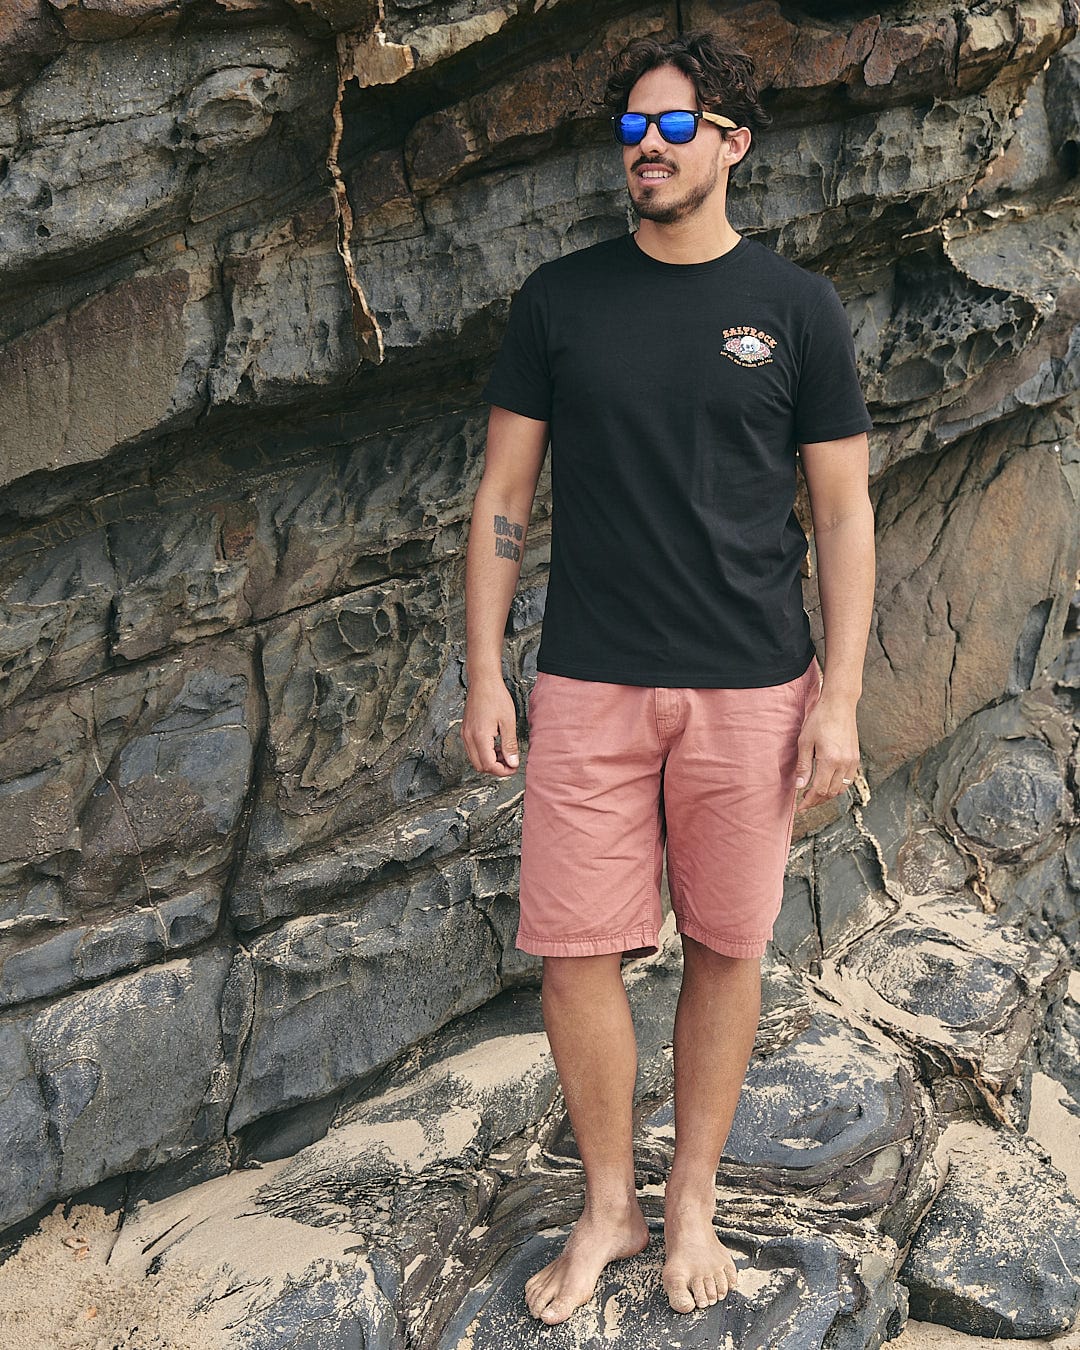 A man wearing sunglasses and a Saltrock - Tattoo Island - Mens Short Sleeve T-Shirt - Black standing on rocks.